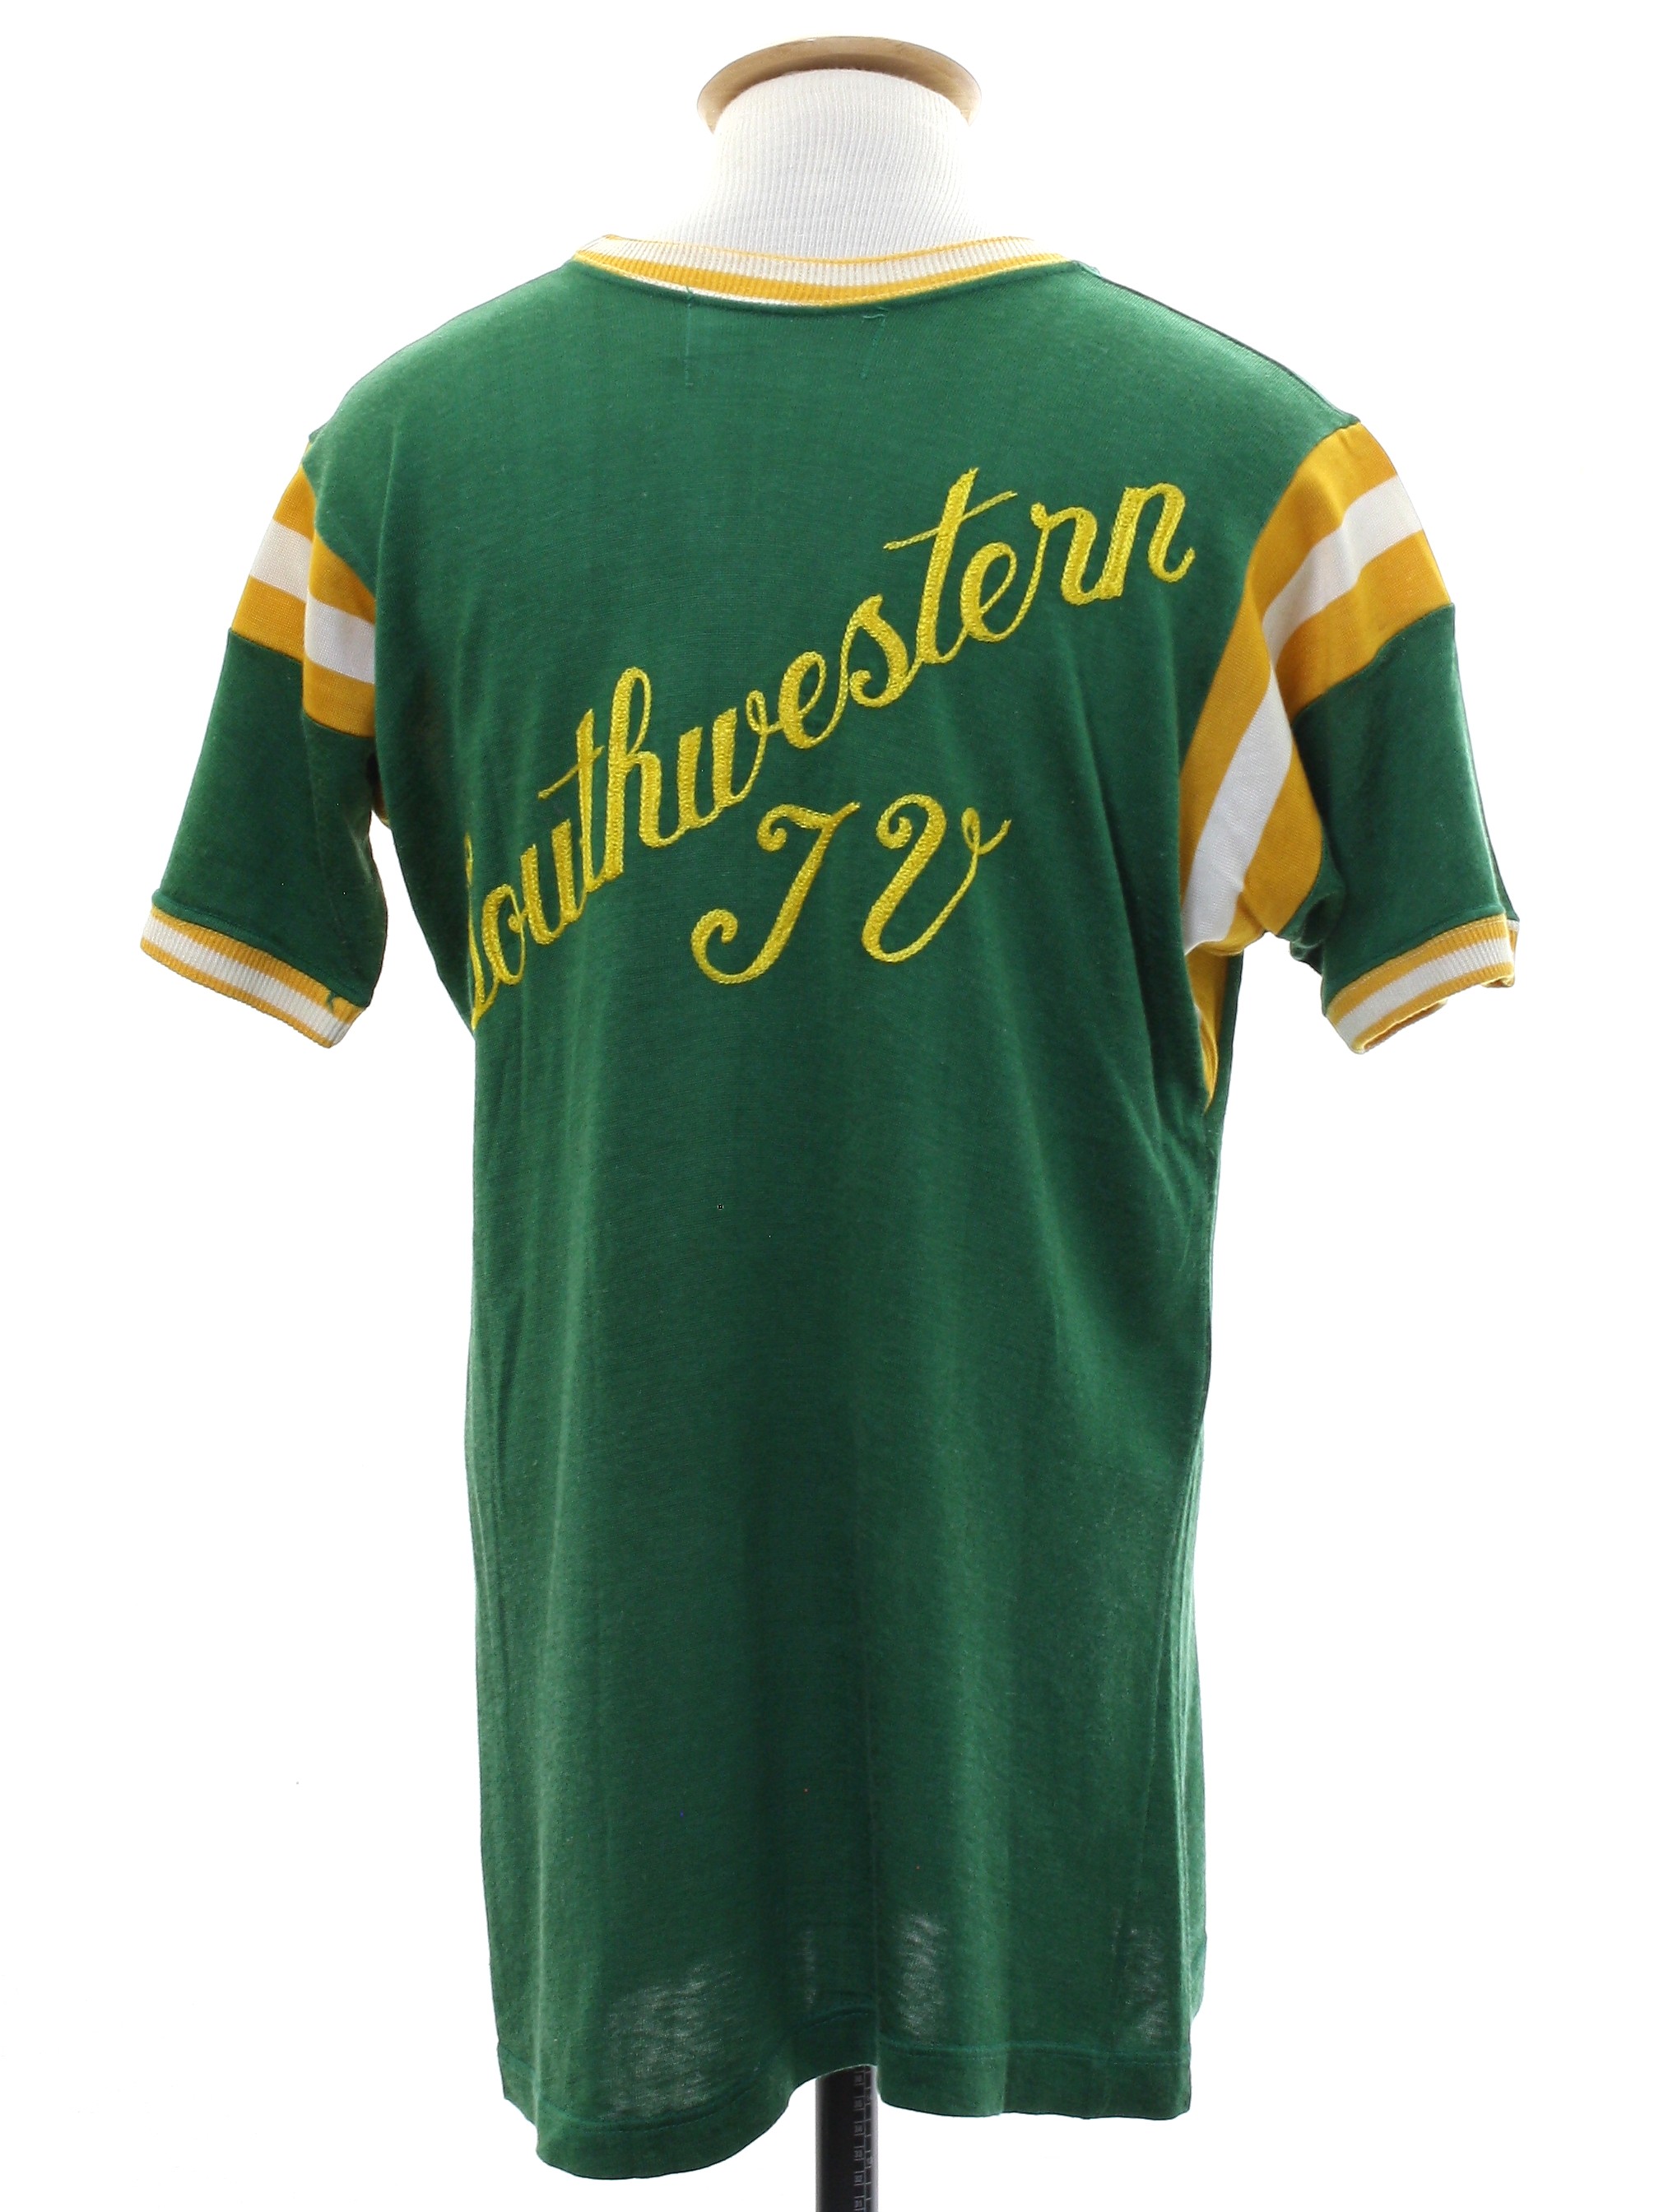 Retro 1950s Western Shirt: 50s -Milwaukie Sporting Goods Co